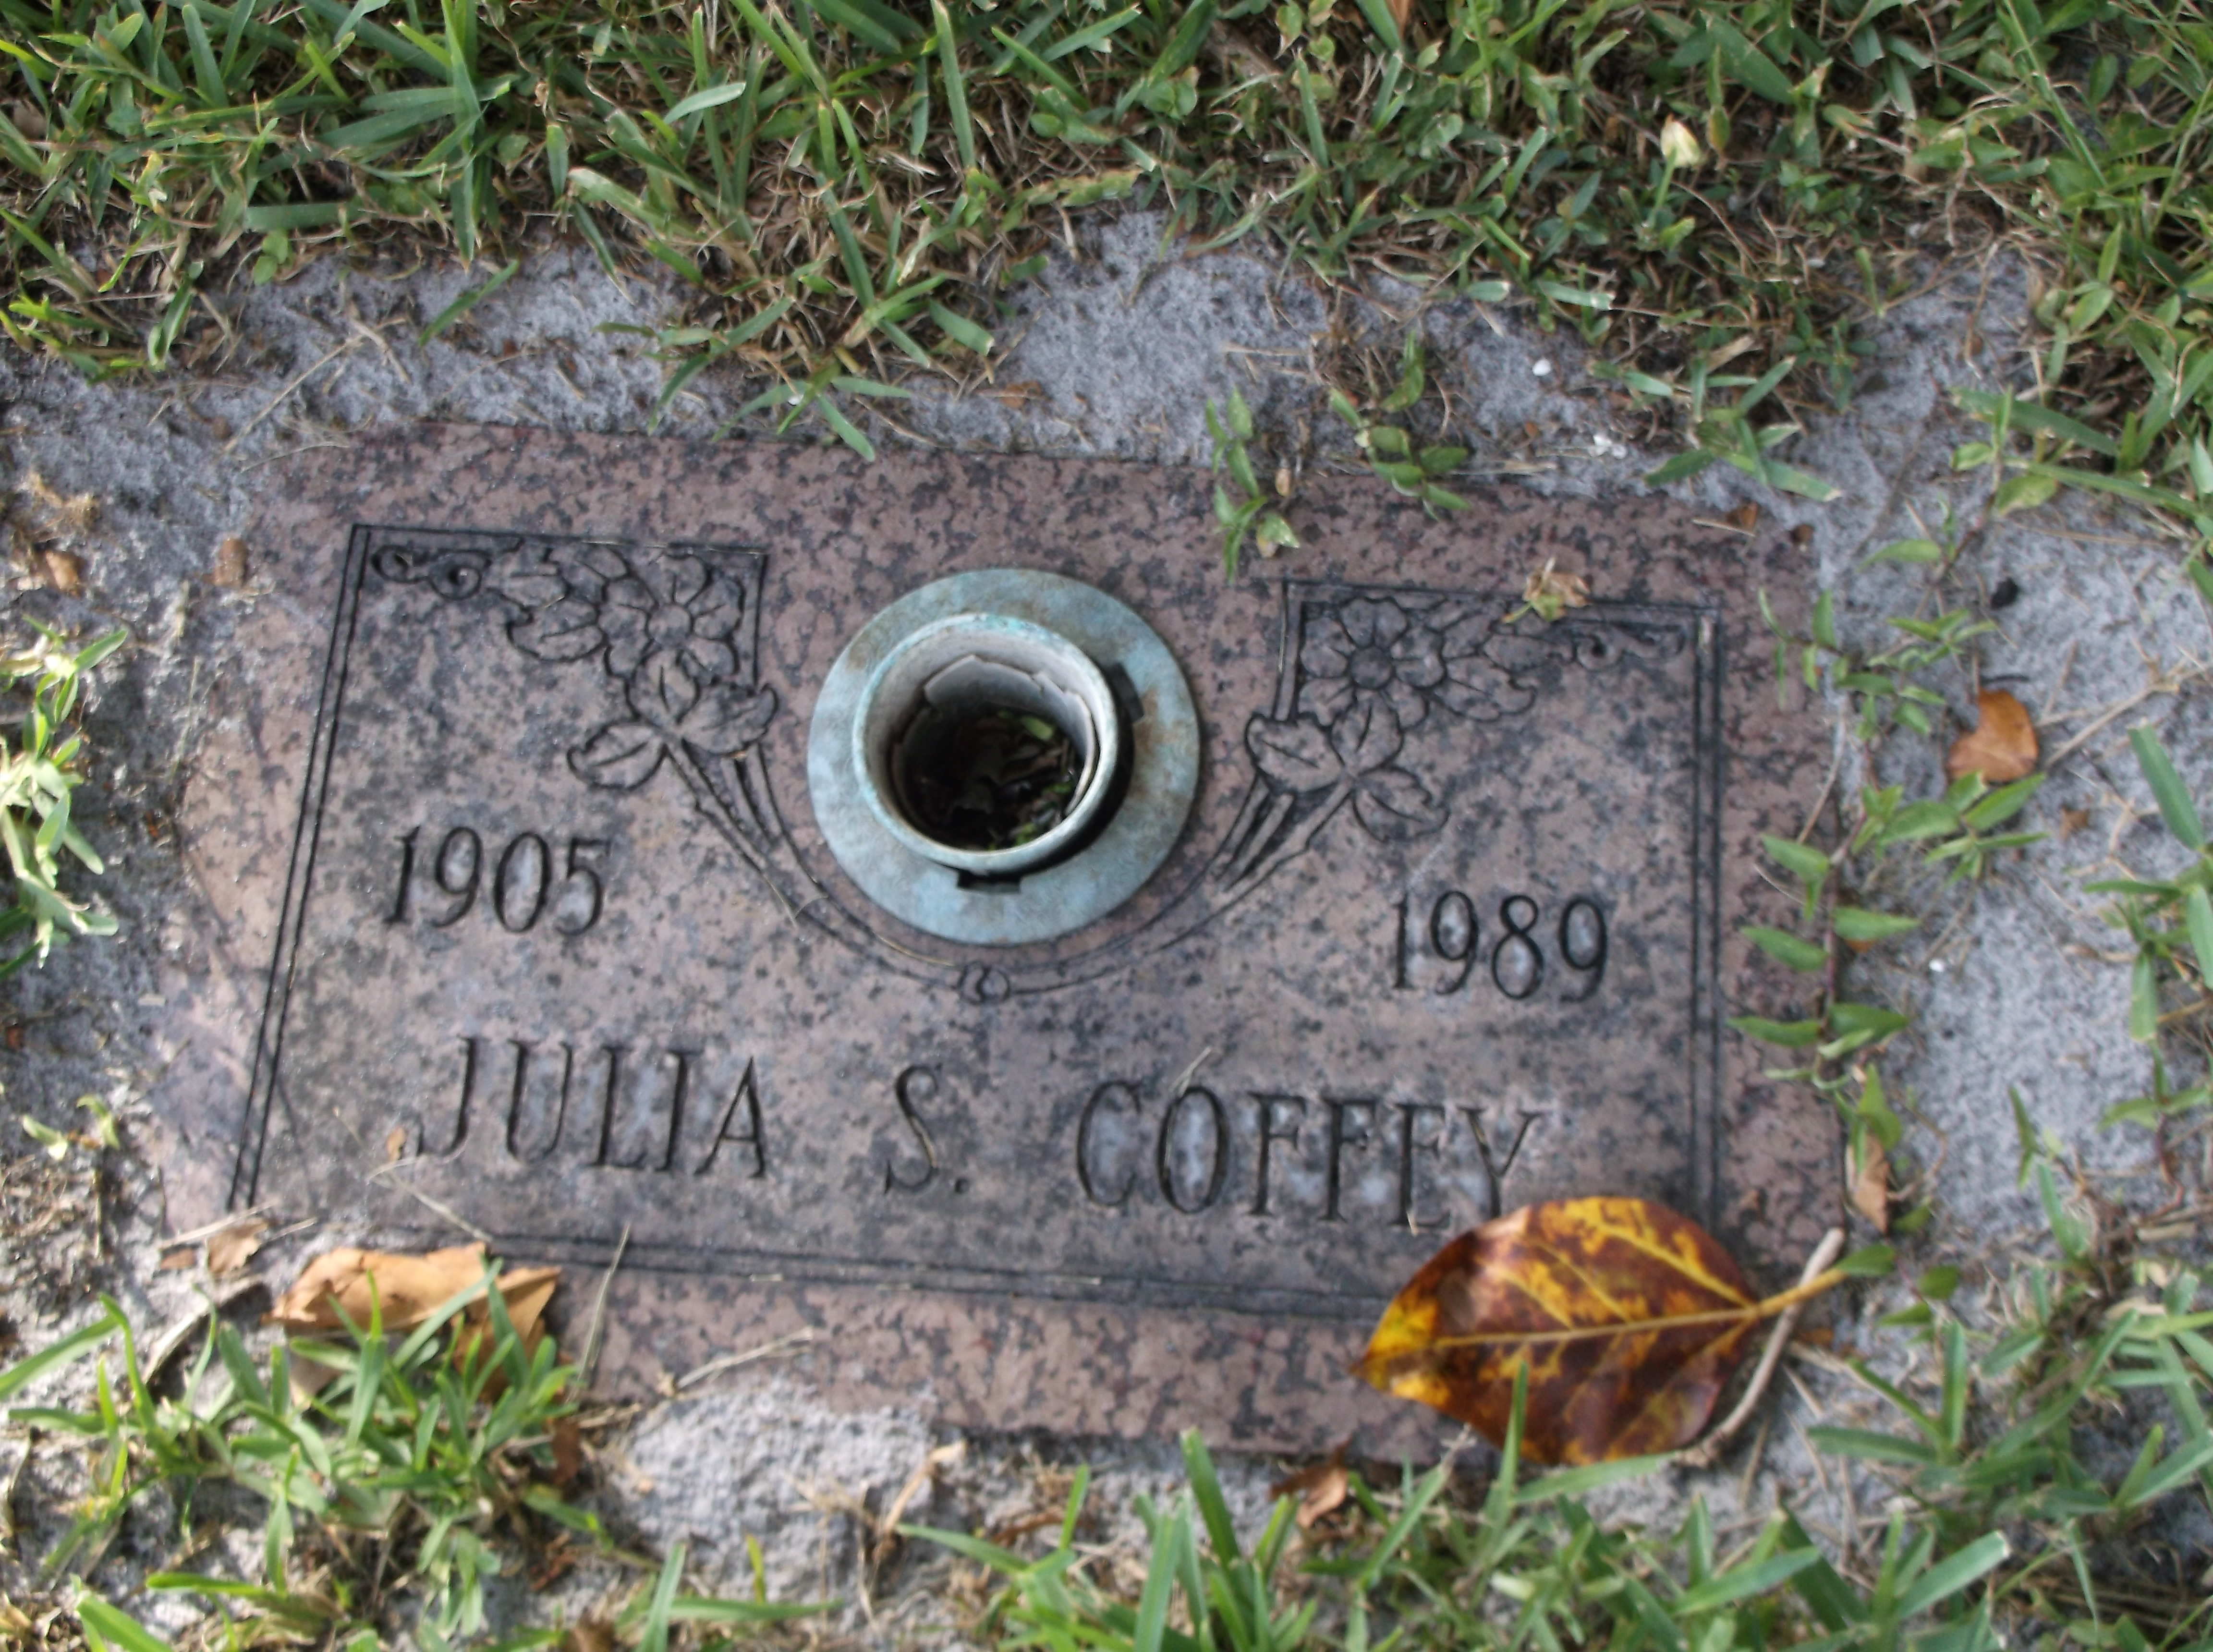 Julia S Coffey